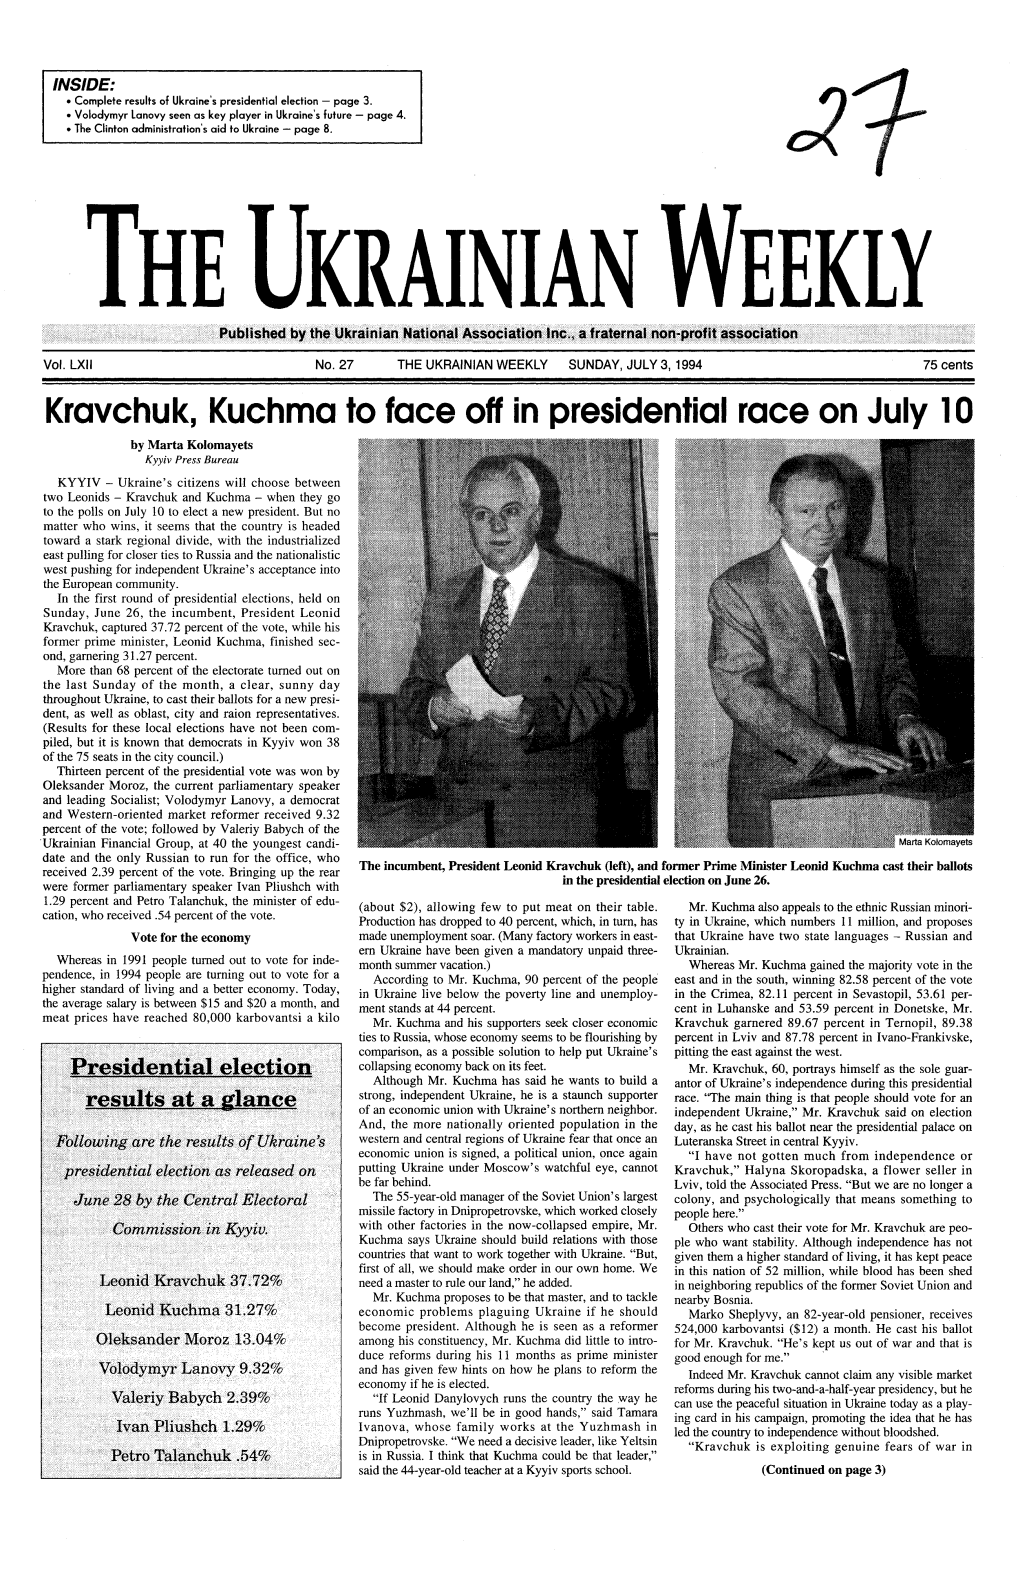 The Ukrainian Weekly 1994, No.27